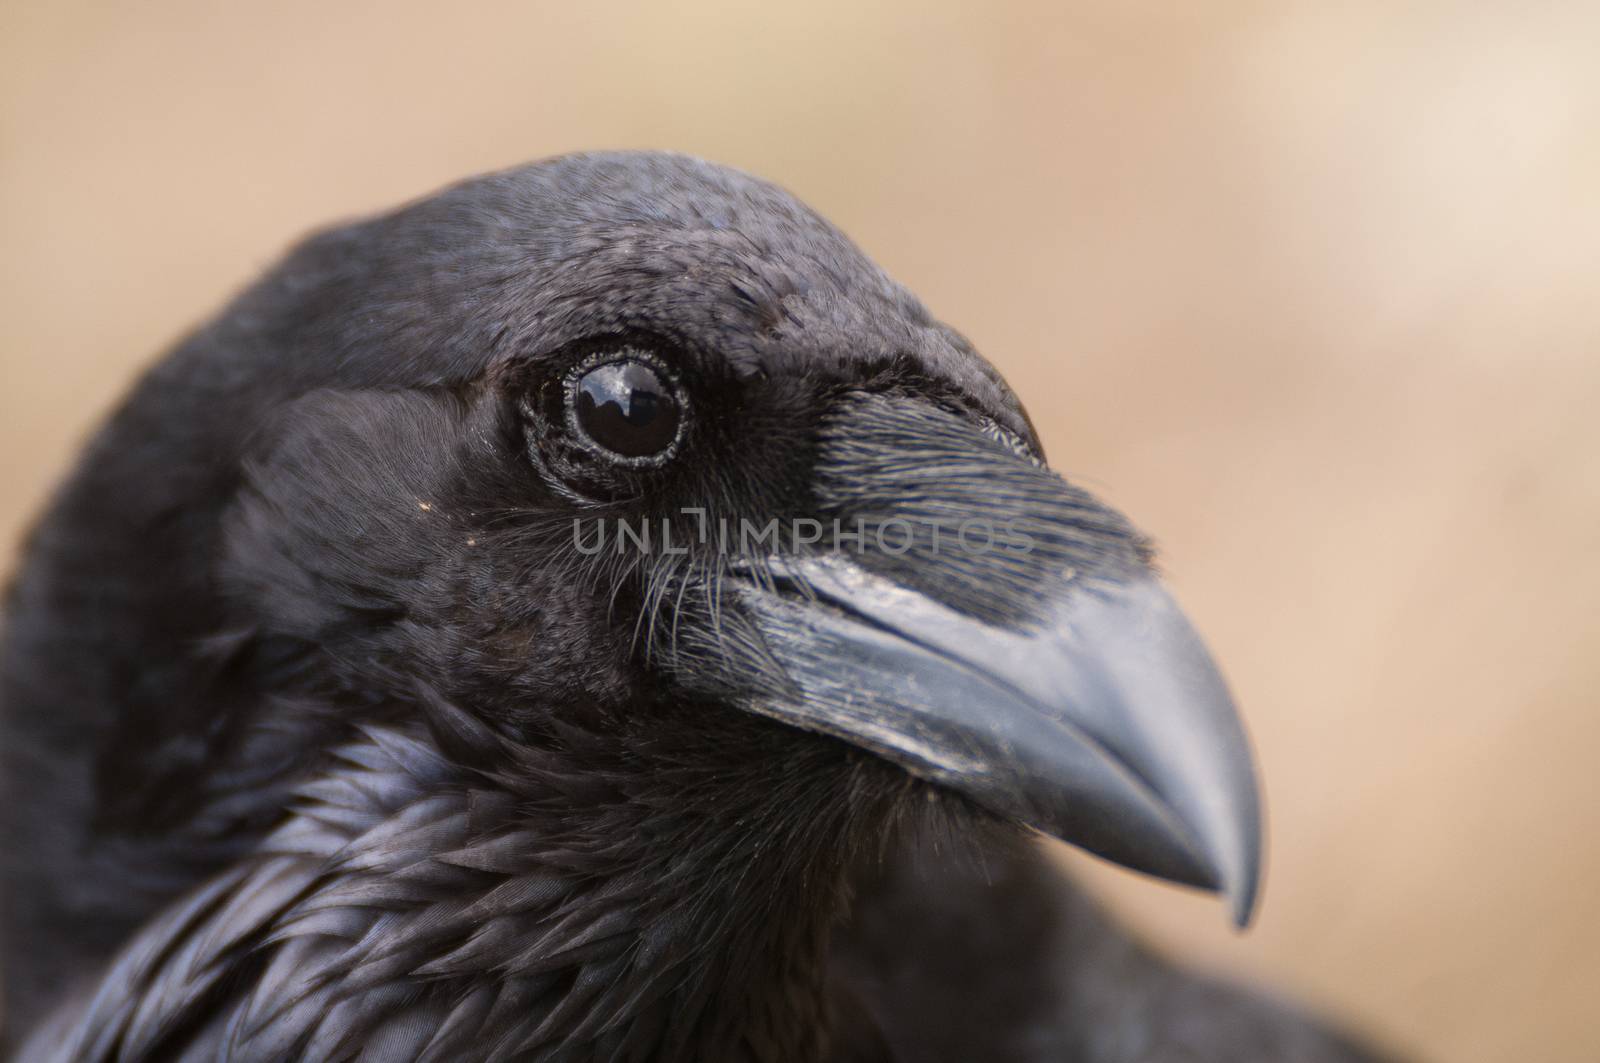 Raven - Corvus corax, Portrait of eyes, head and beak by jalonsohu@gmail.com